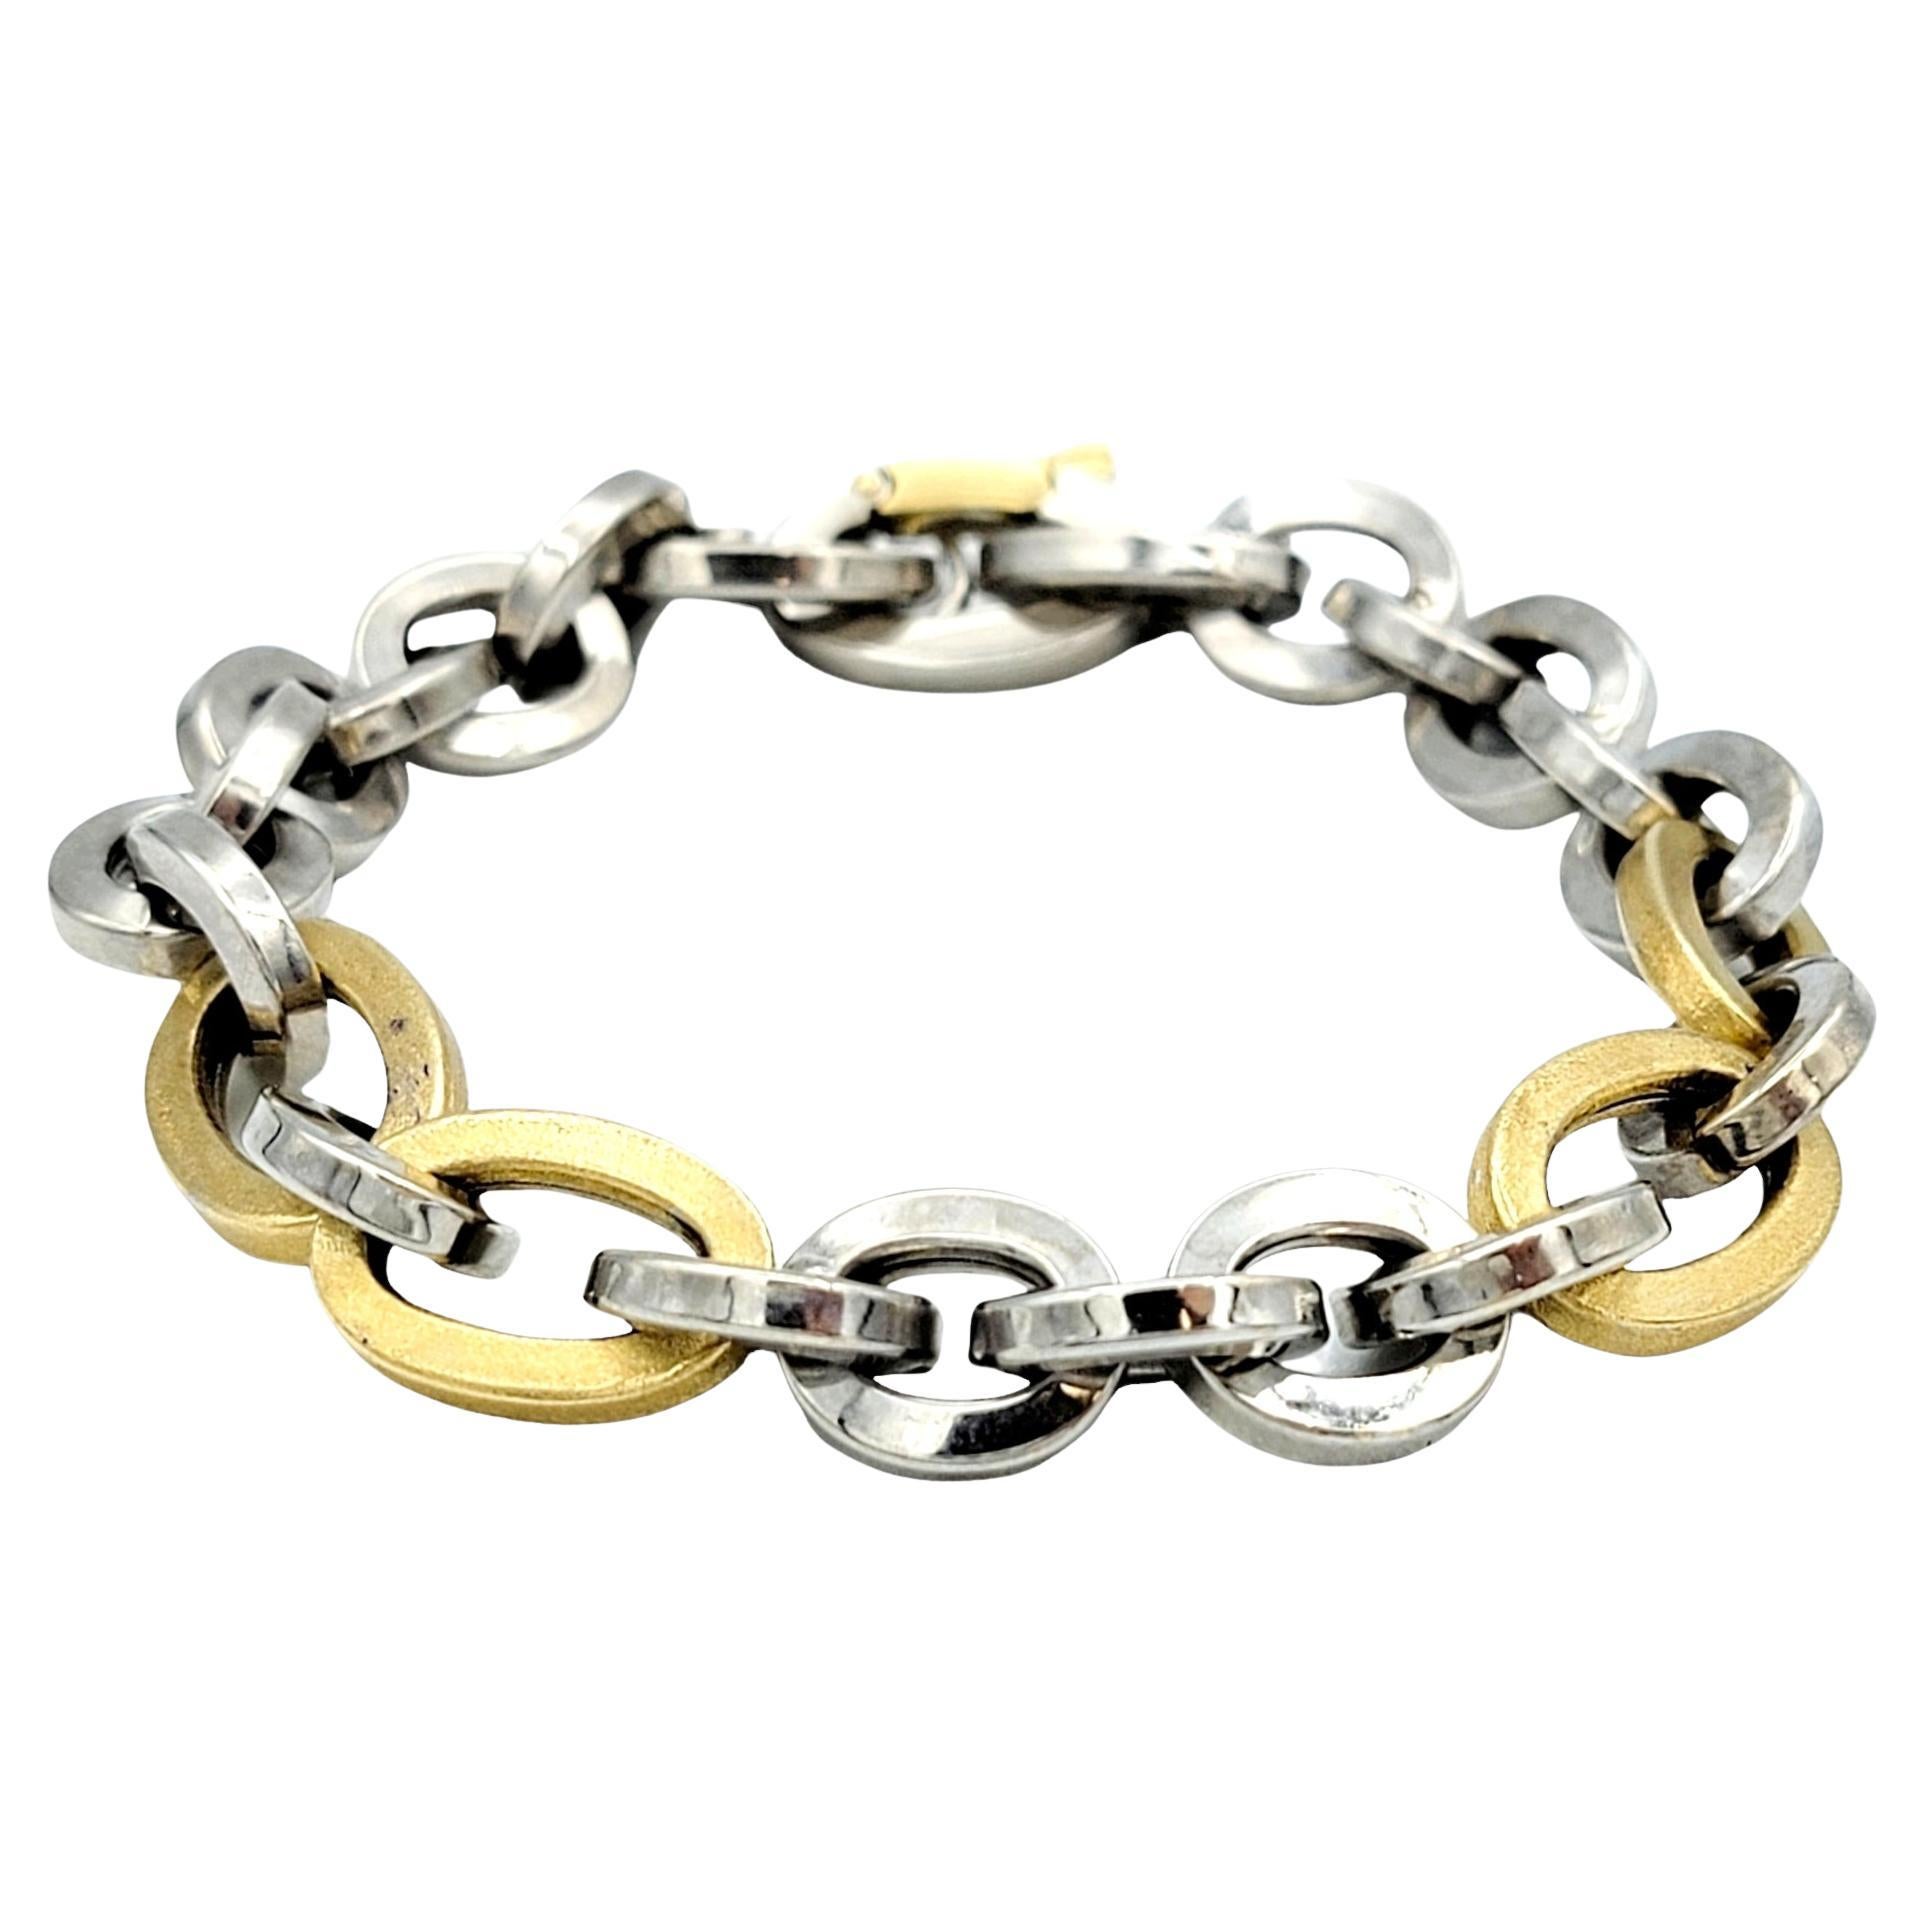 Unoaerre Large Chunky Two-Tone Chain Link Bracelet in 18 Karat Gold